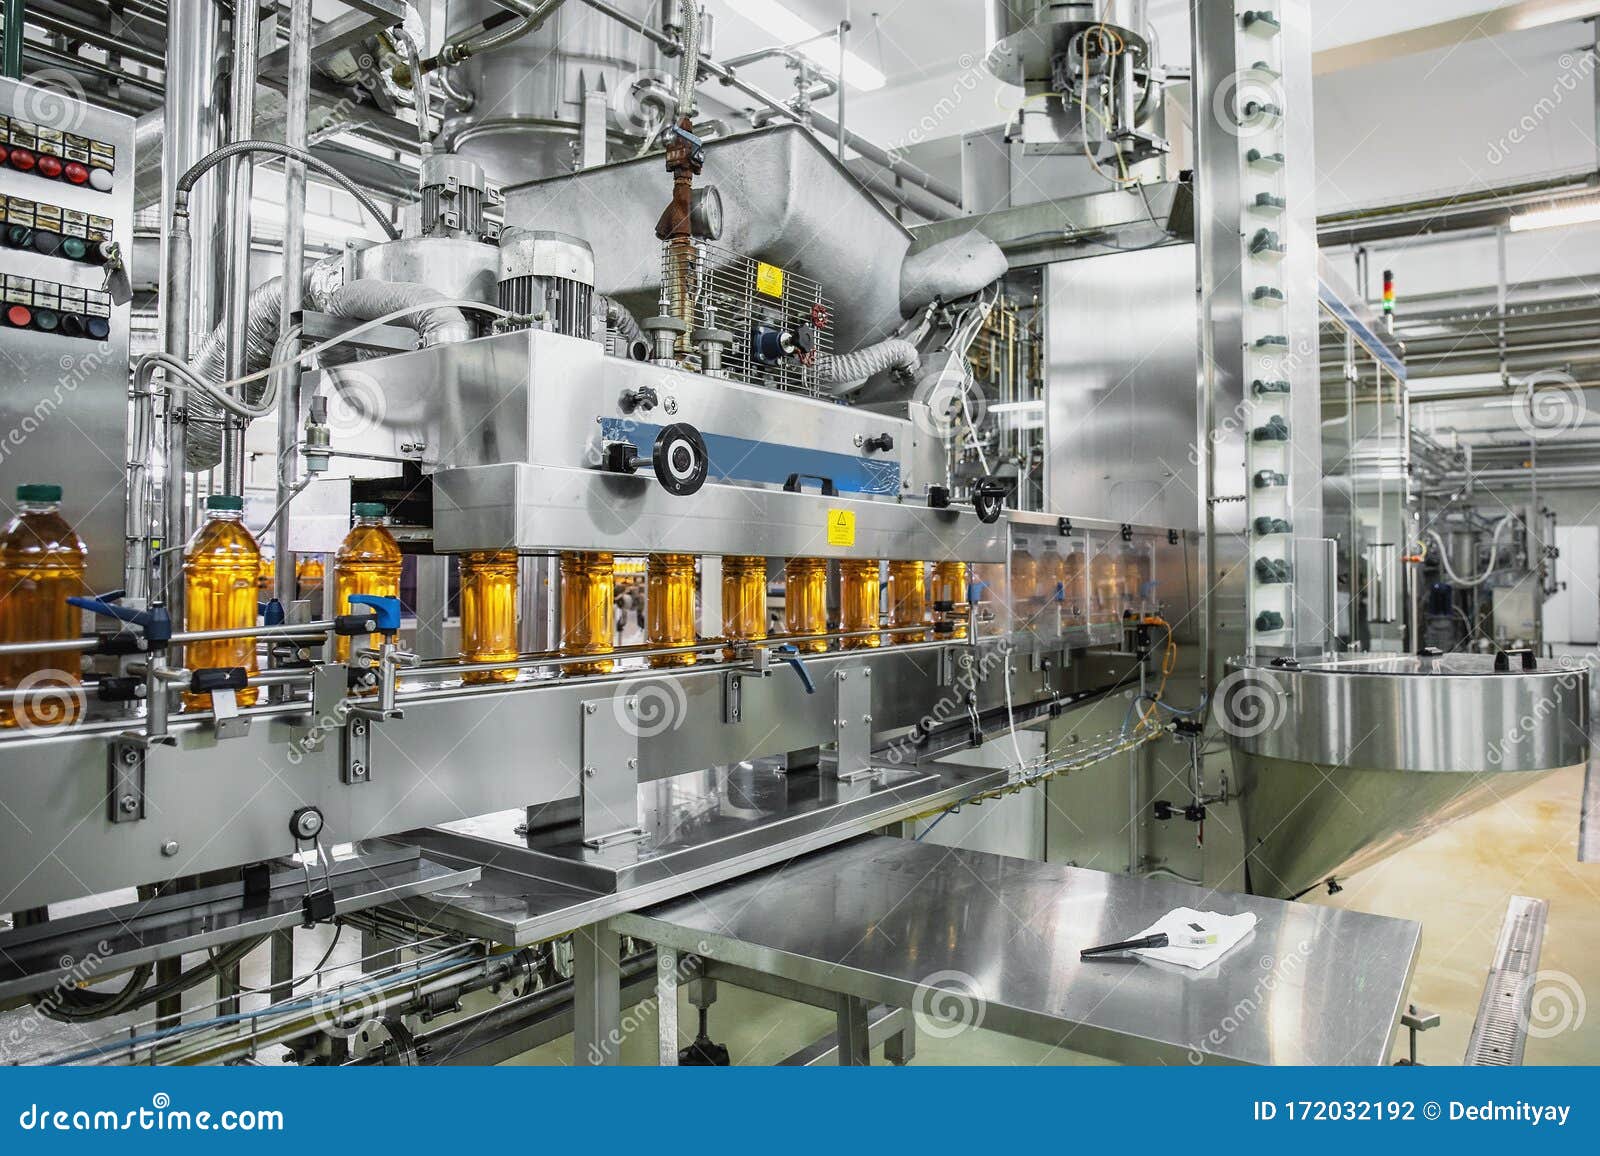 industrial interior of natural juice plant production. conveyor belt, filled bottles on beverage factory, industry